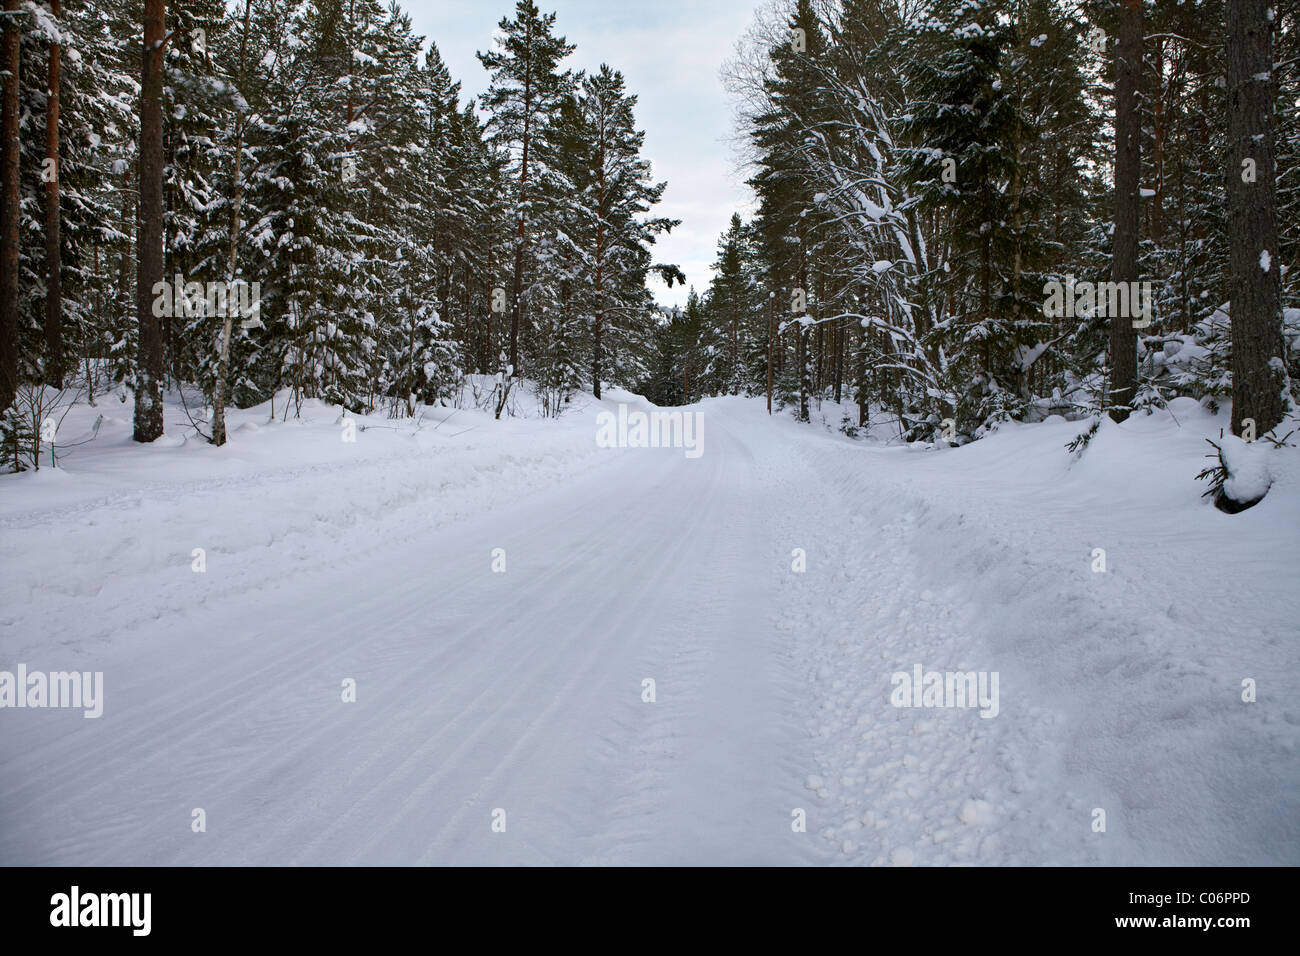 Sweden in Snow Stock Photo